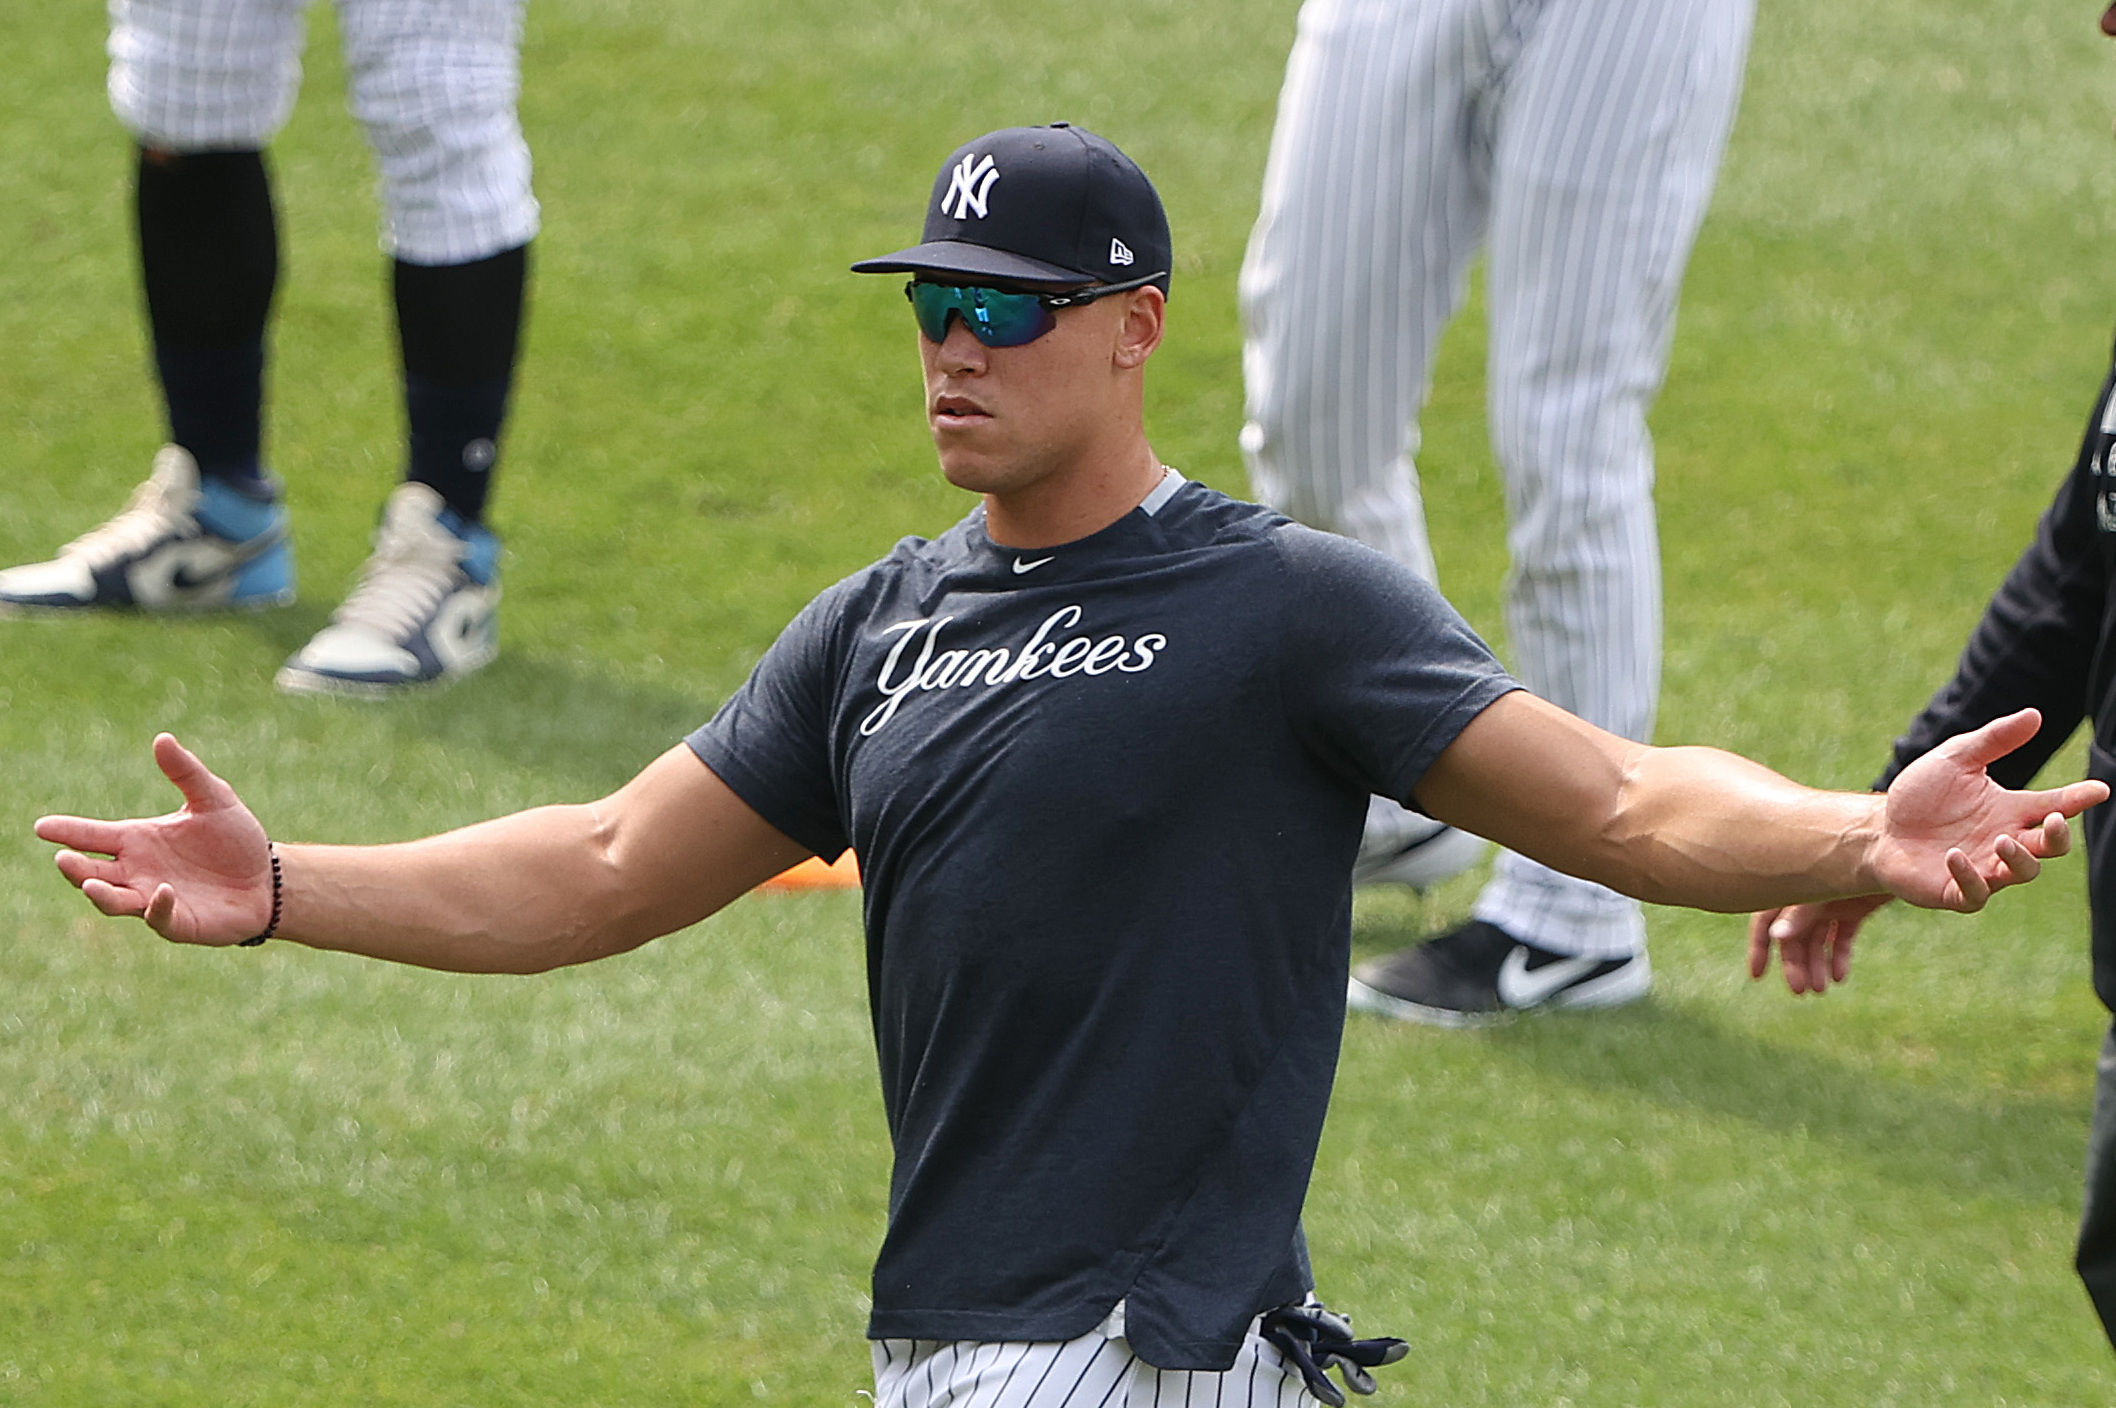 New York Yankees' Aaron Judge can't wait to play alongside Giancarlo Stanton  - ESPN